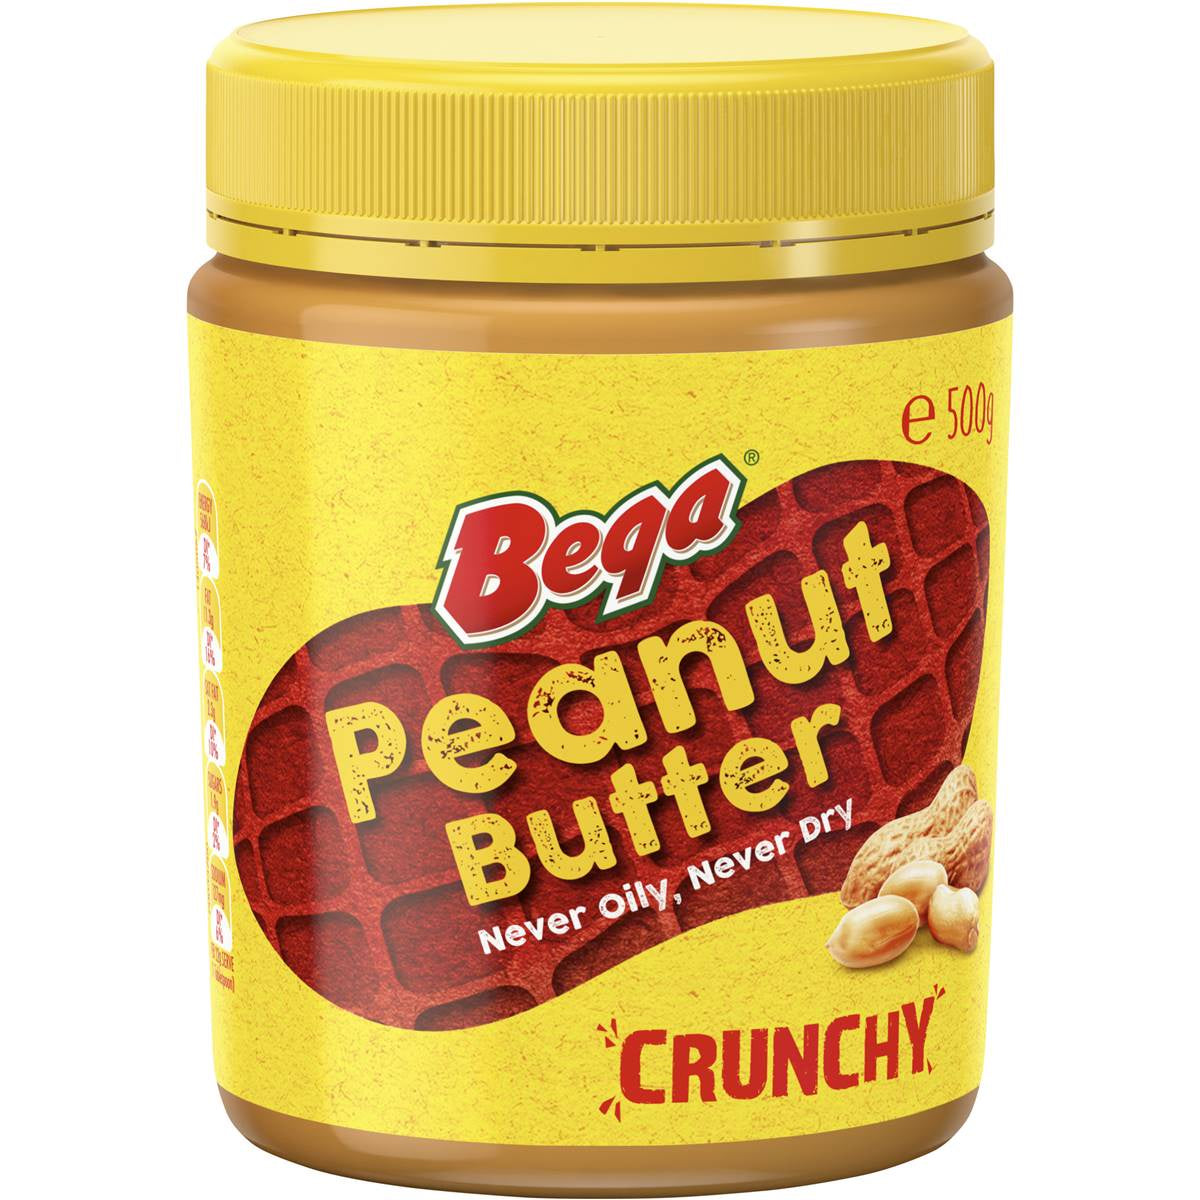 Bega Peanut Butter Crunchy 470g